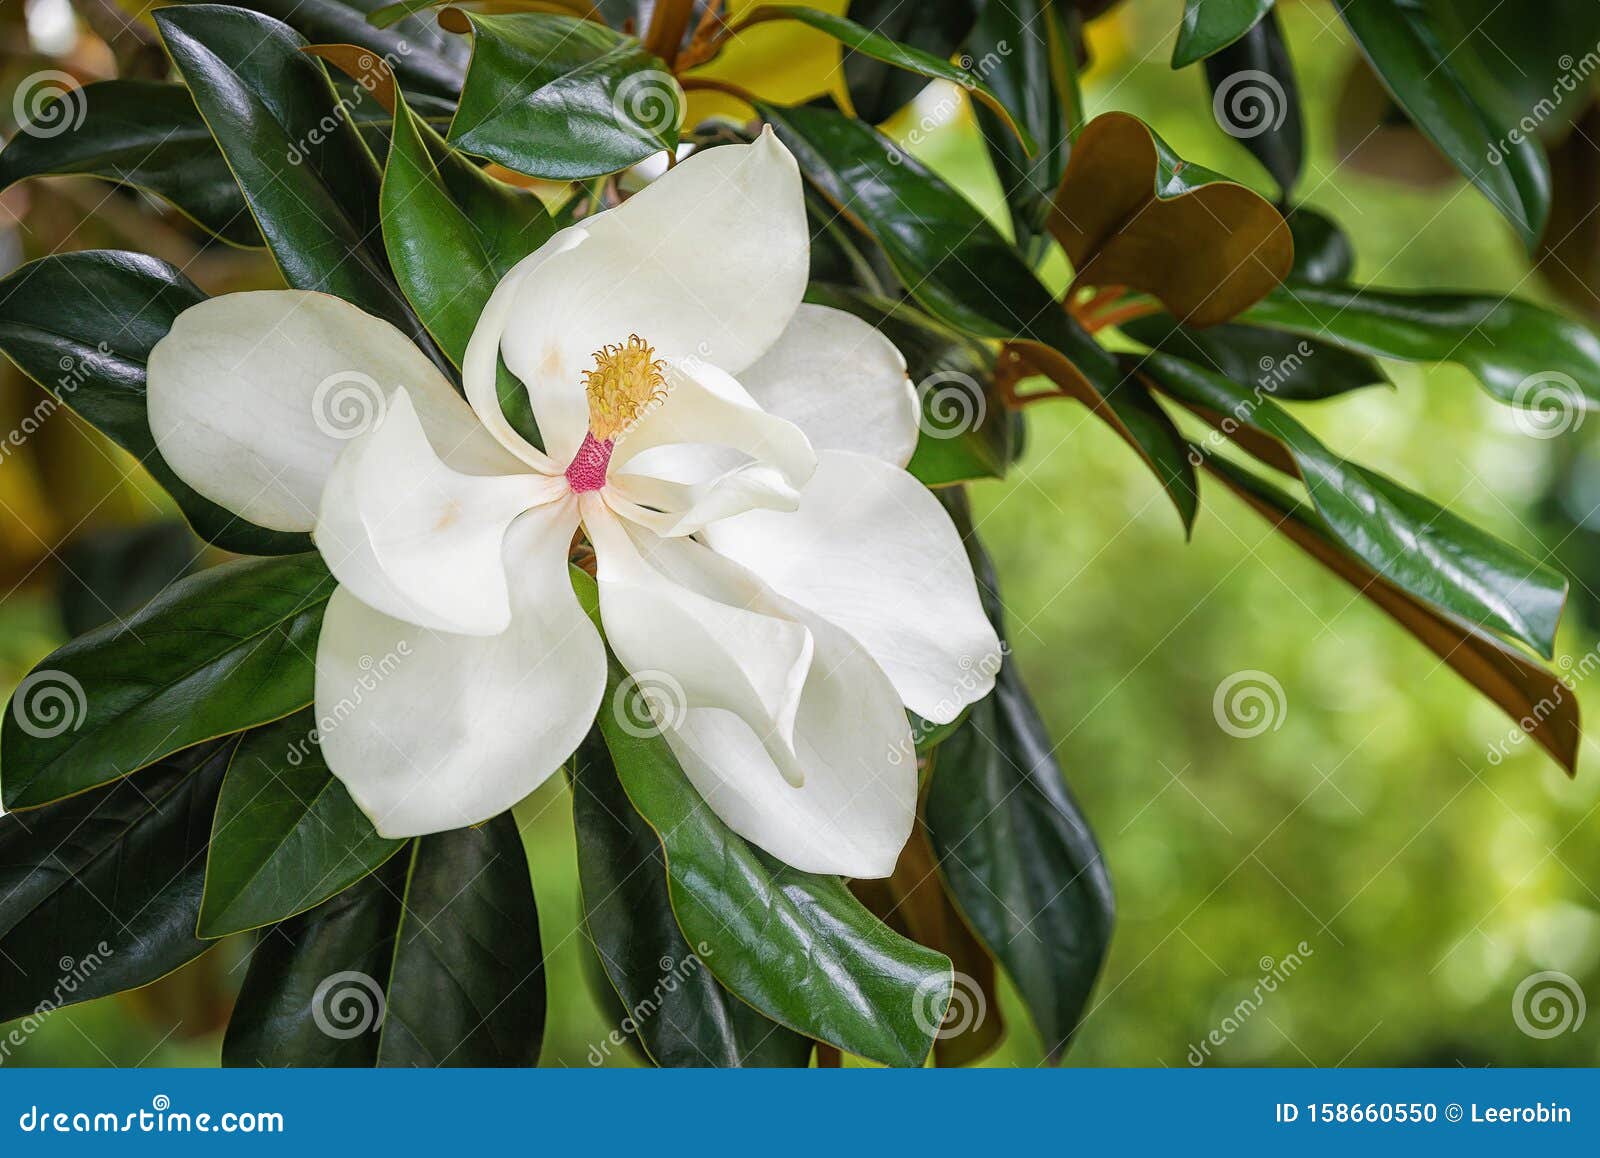 white southern magnolia flower blossom